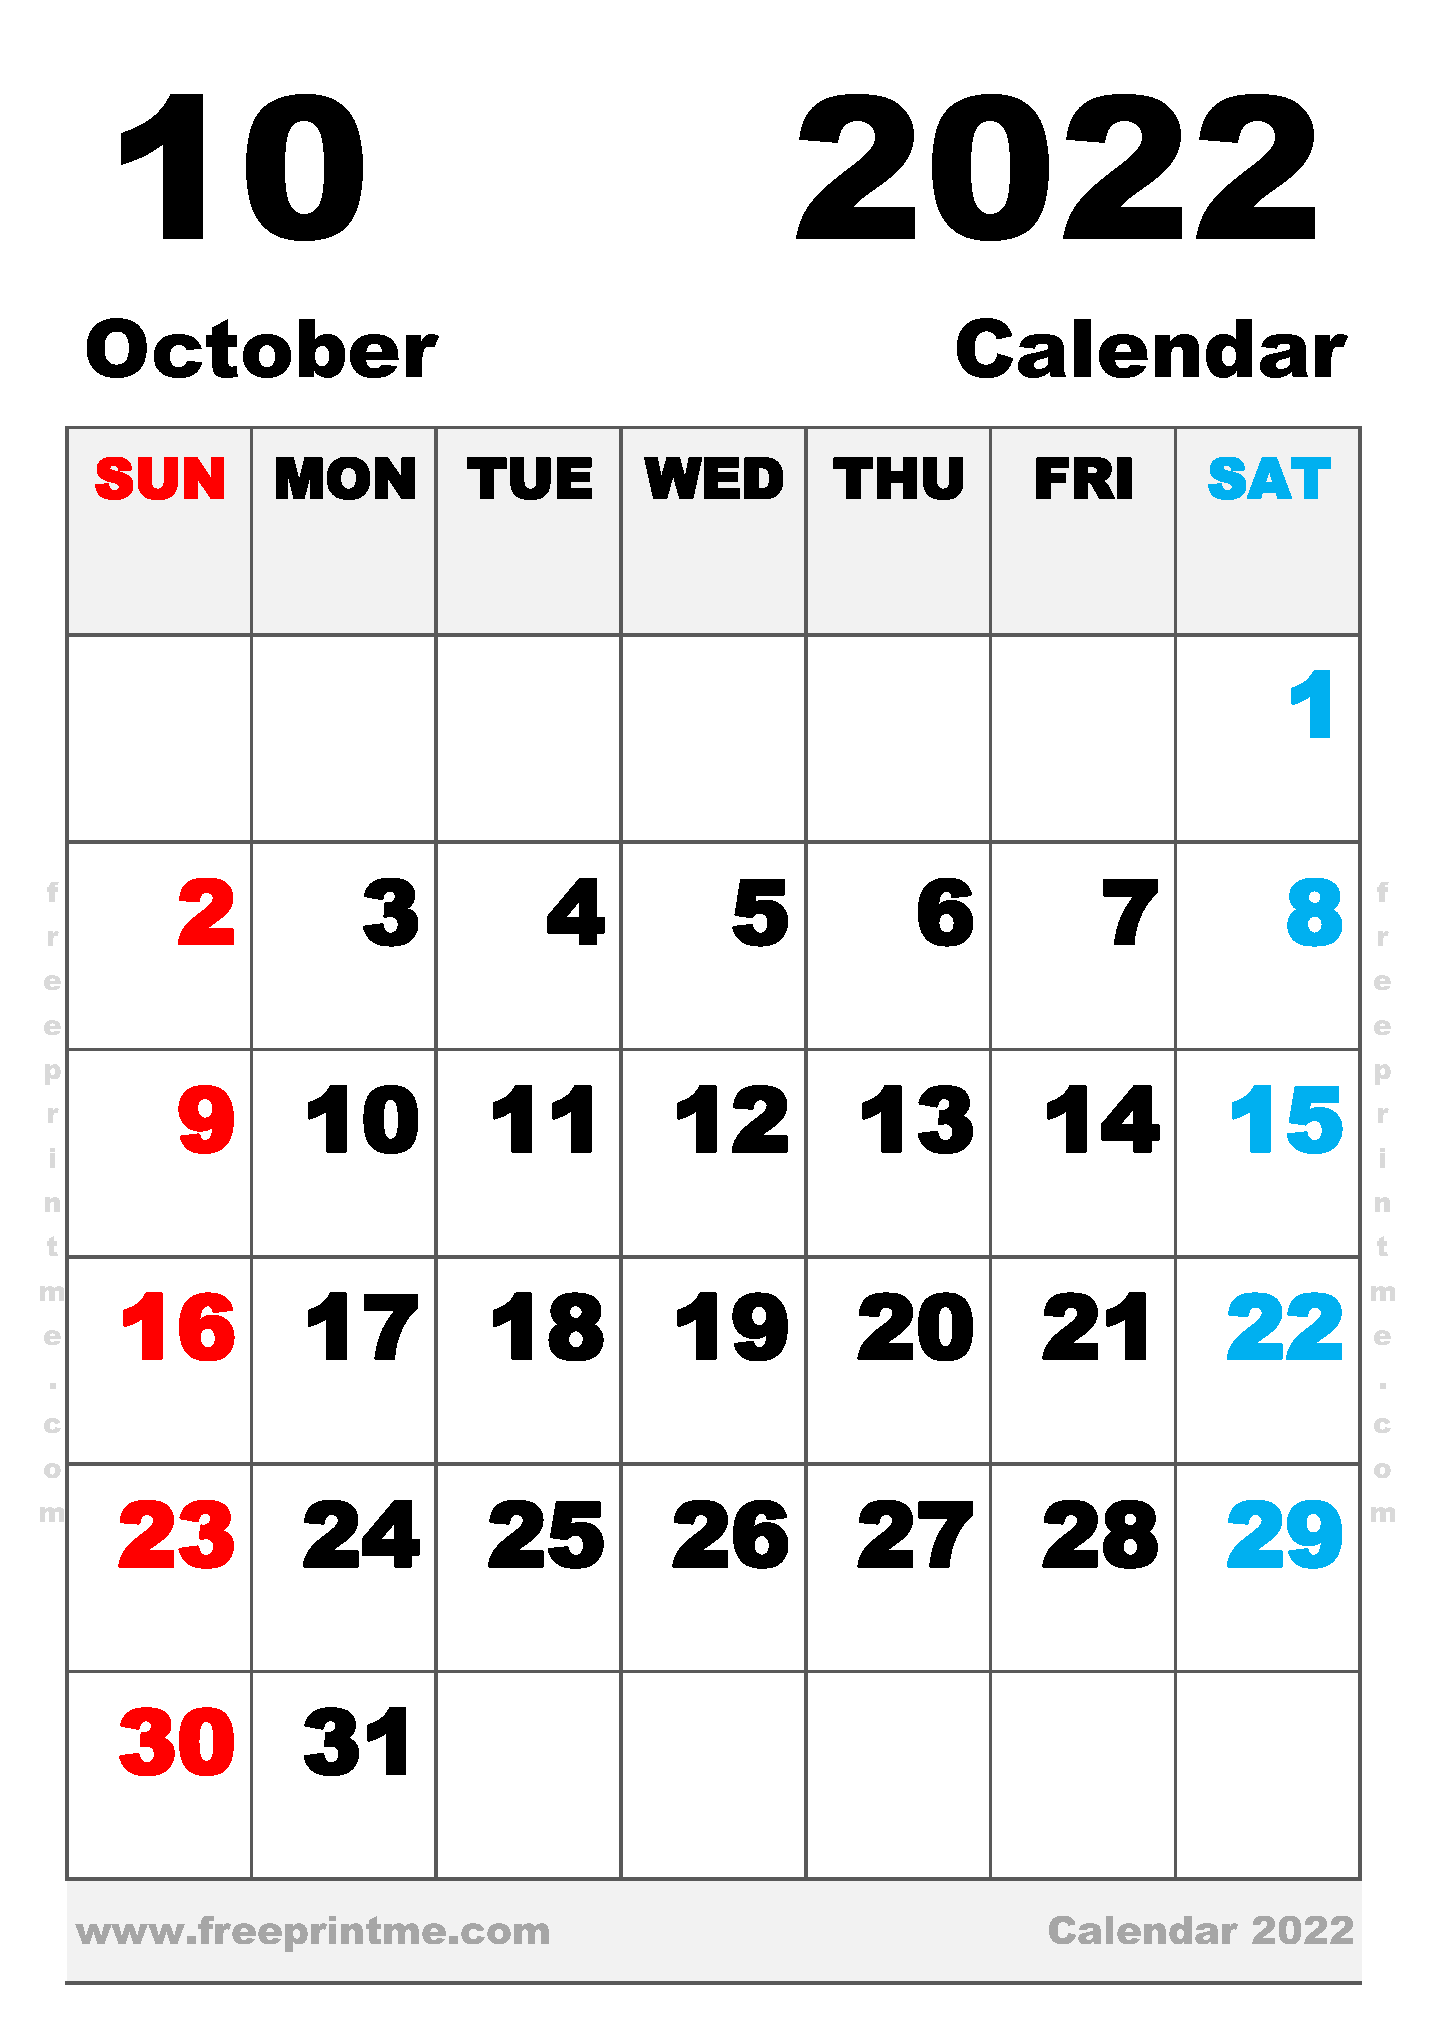 Free Printable October 2022 Calendar B5